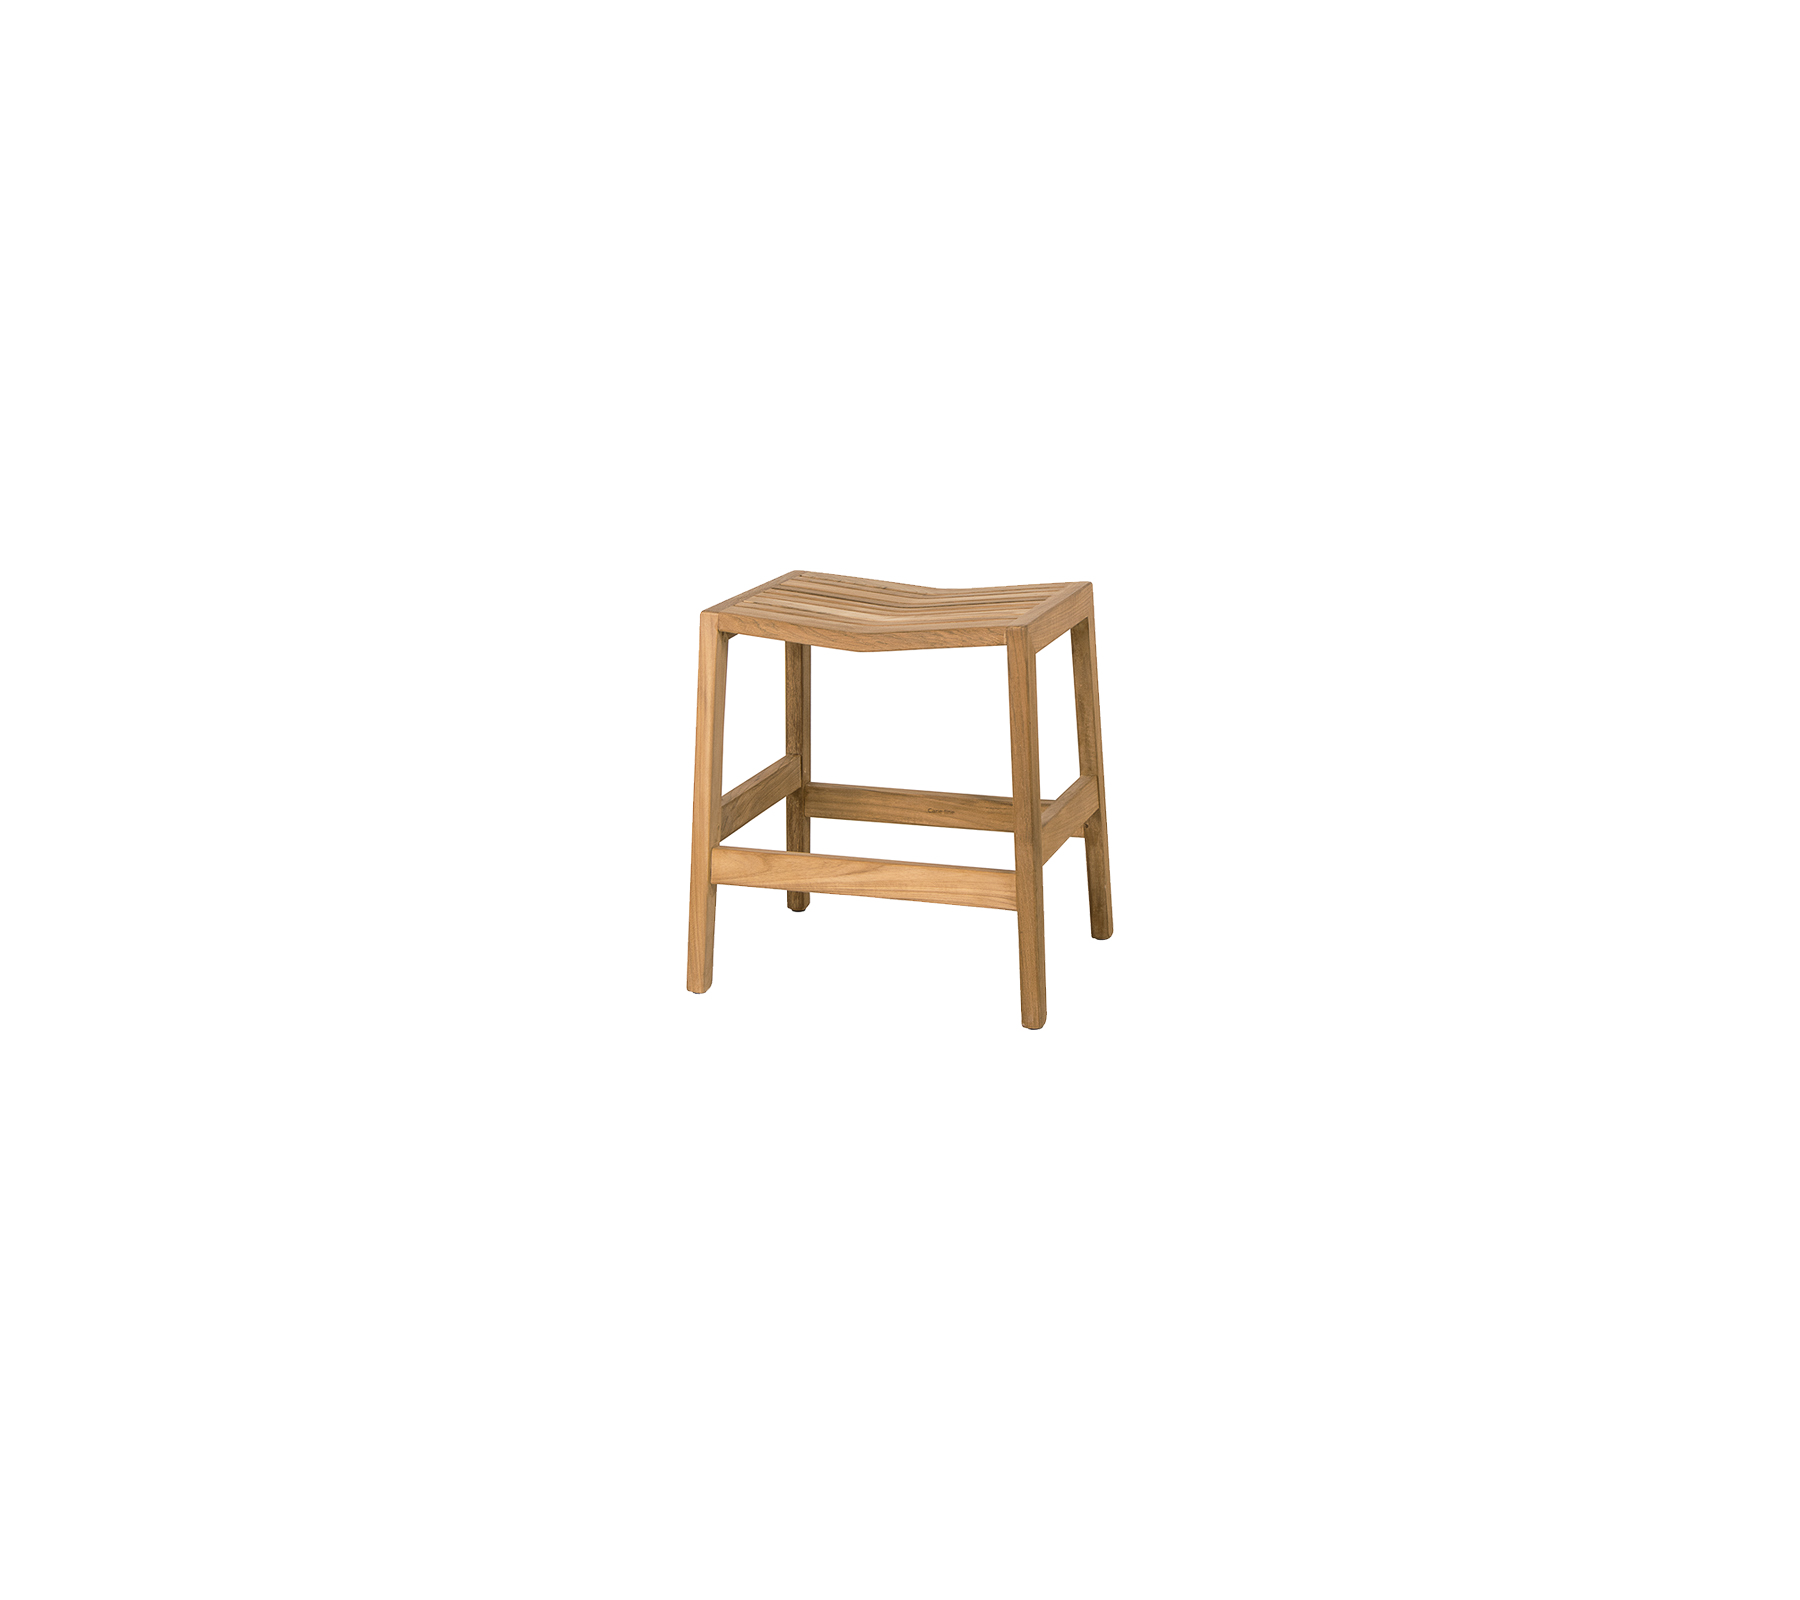 Flip stool banca